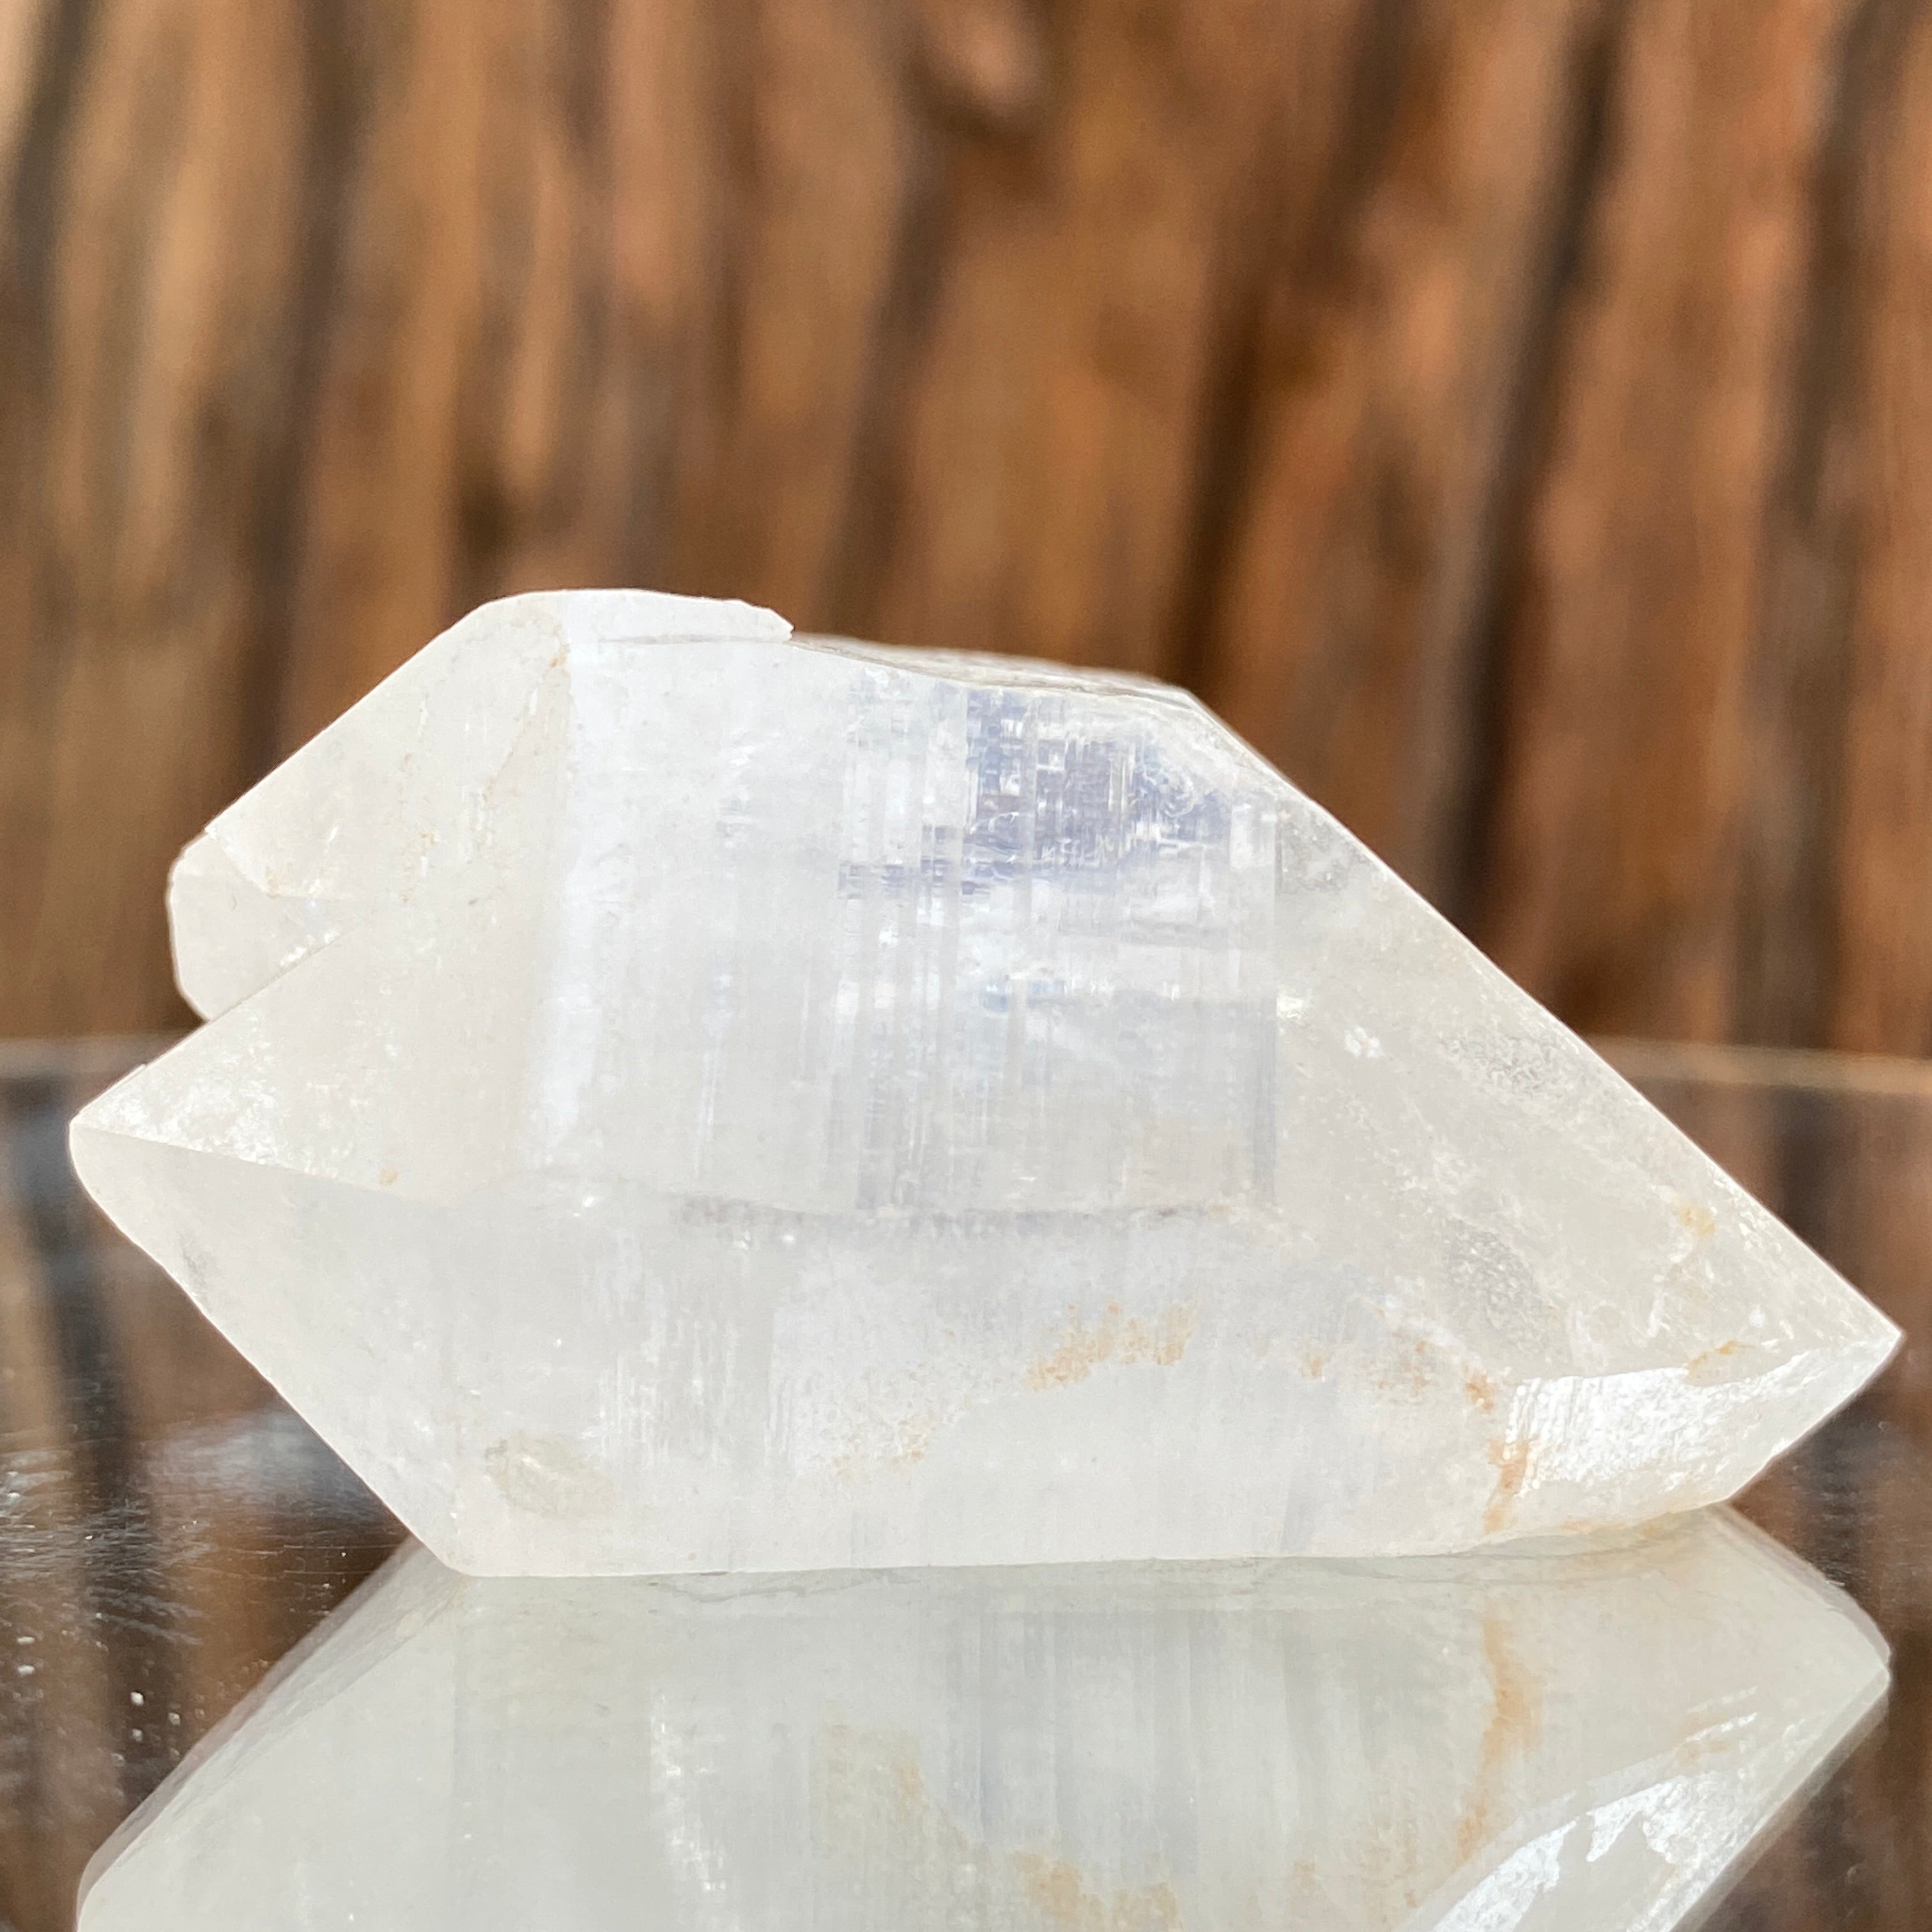 50g 6x4x3cm Himalayan Clear Quartz Crystal from Pakistan